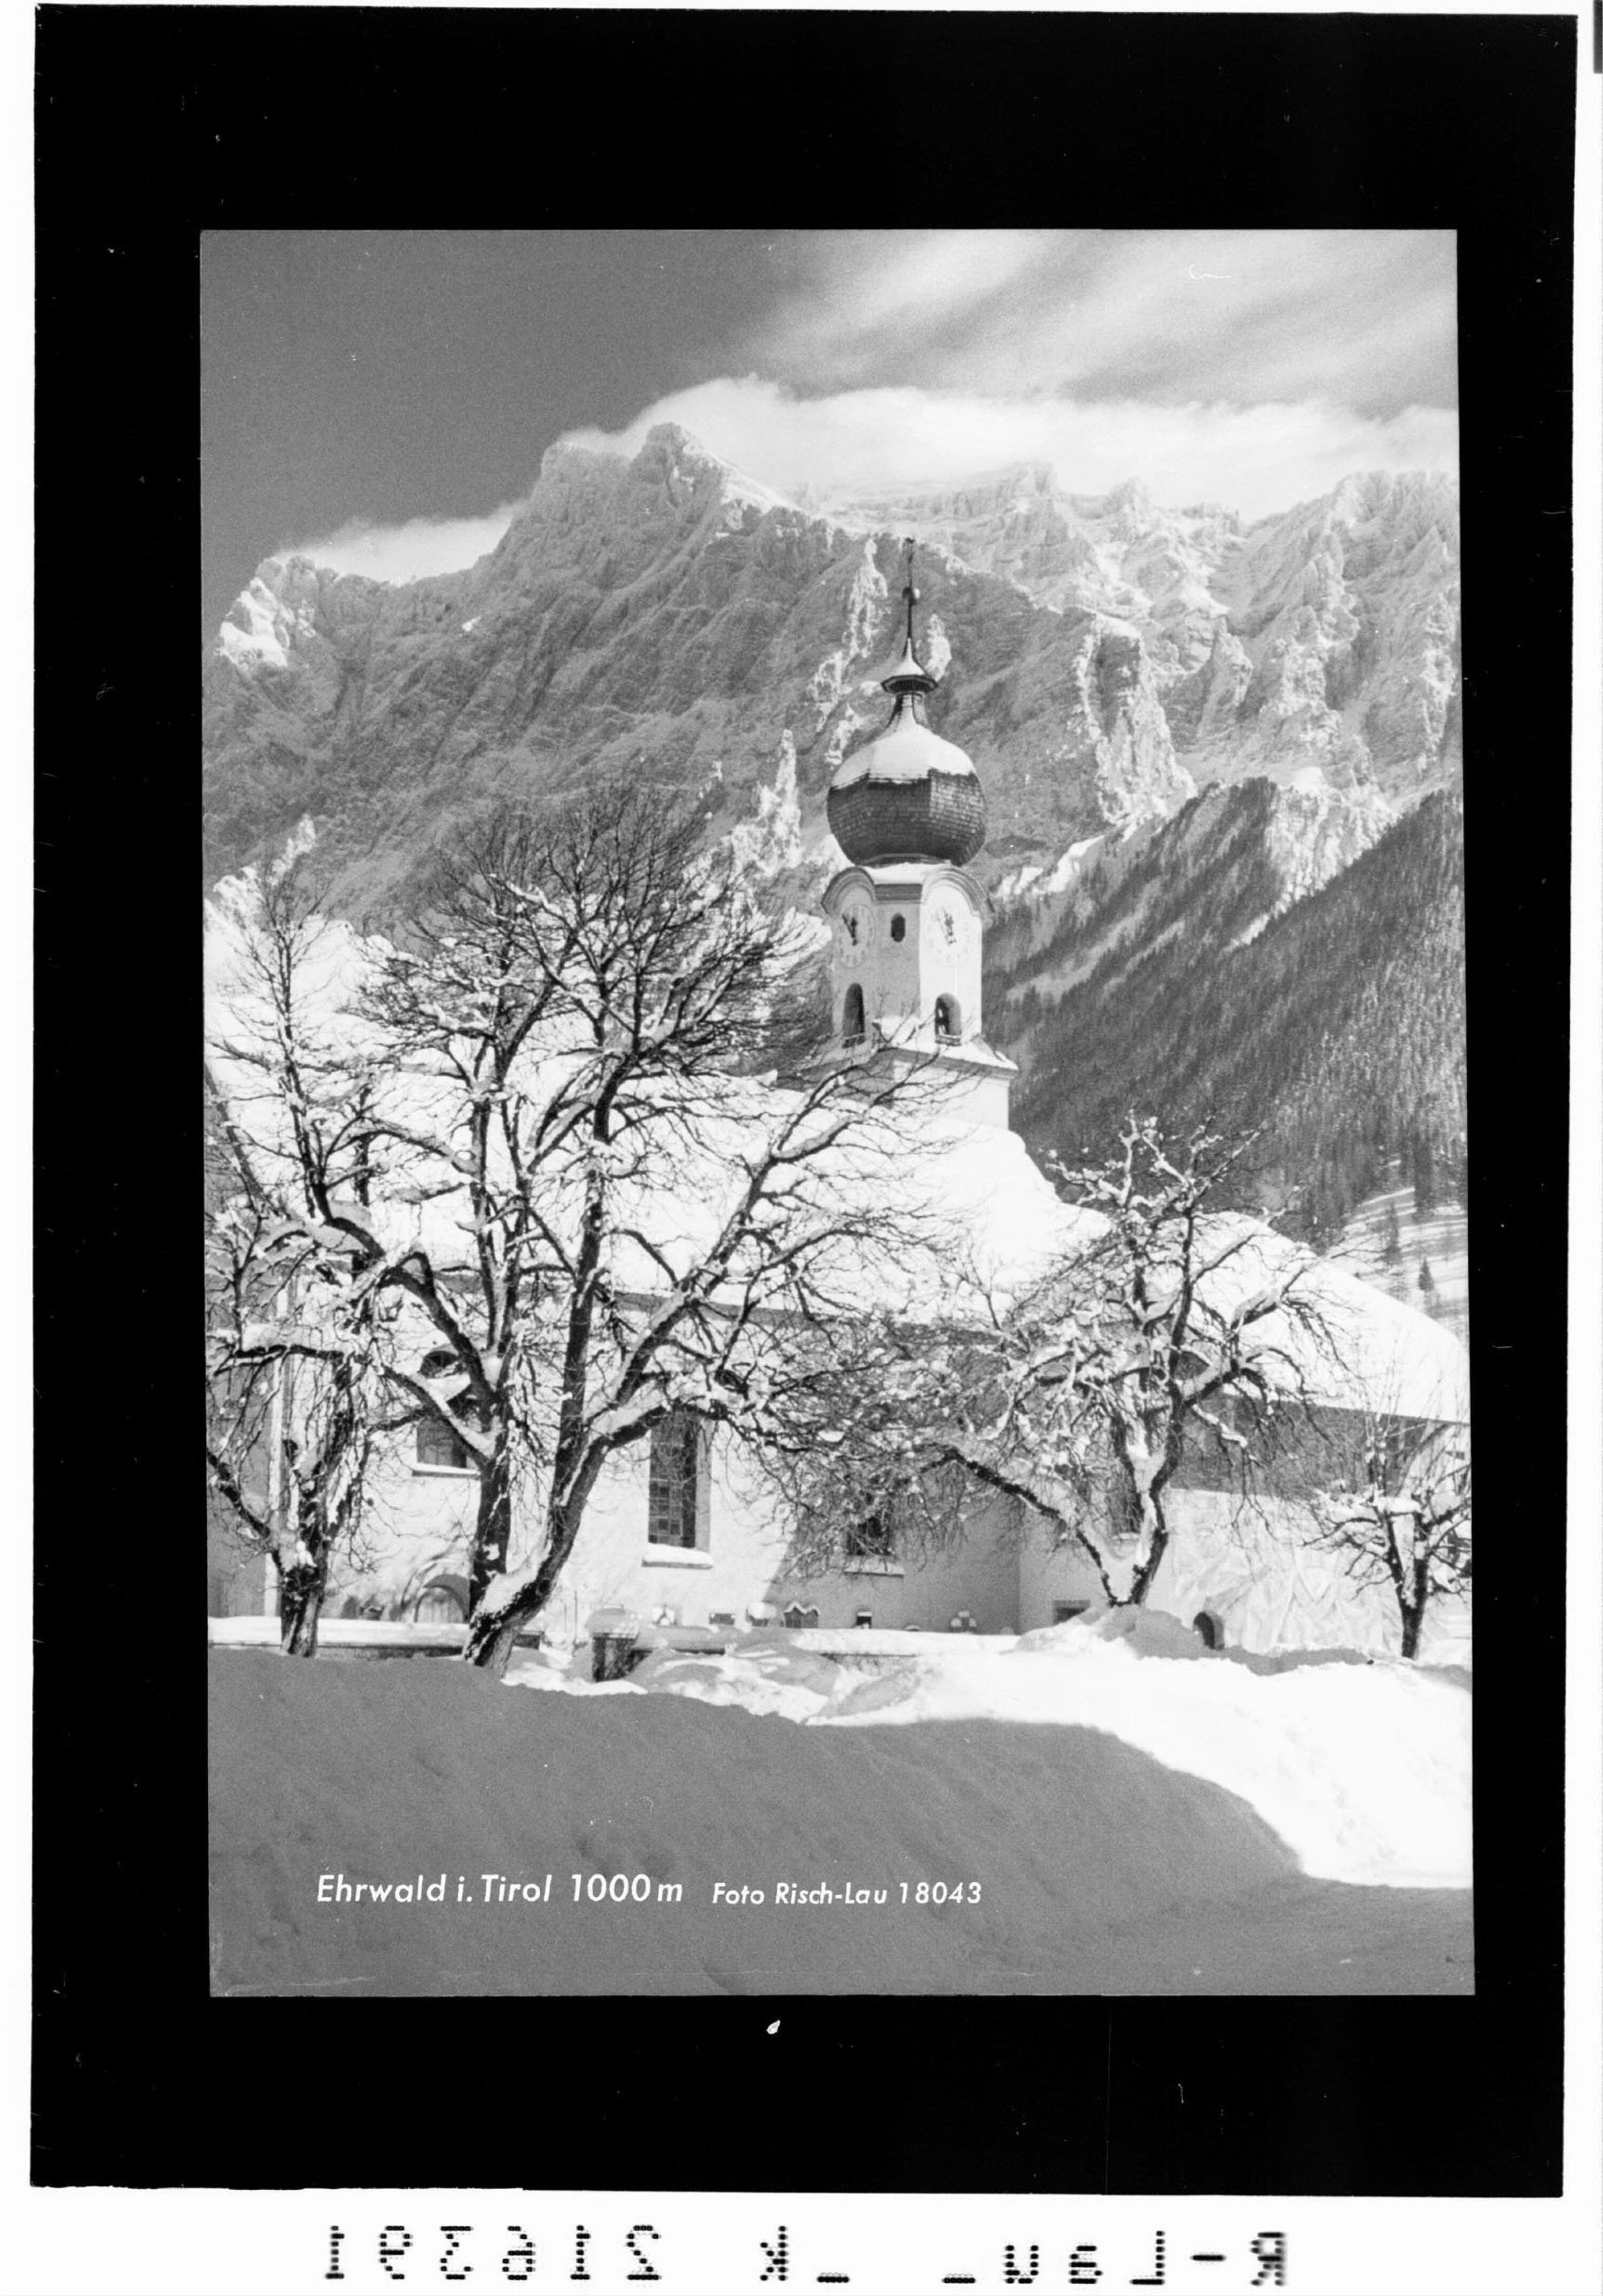 Ehrwald in Tirol 1000 m></div>


    <hr>
    <div class=